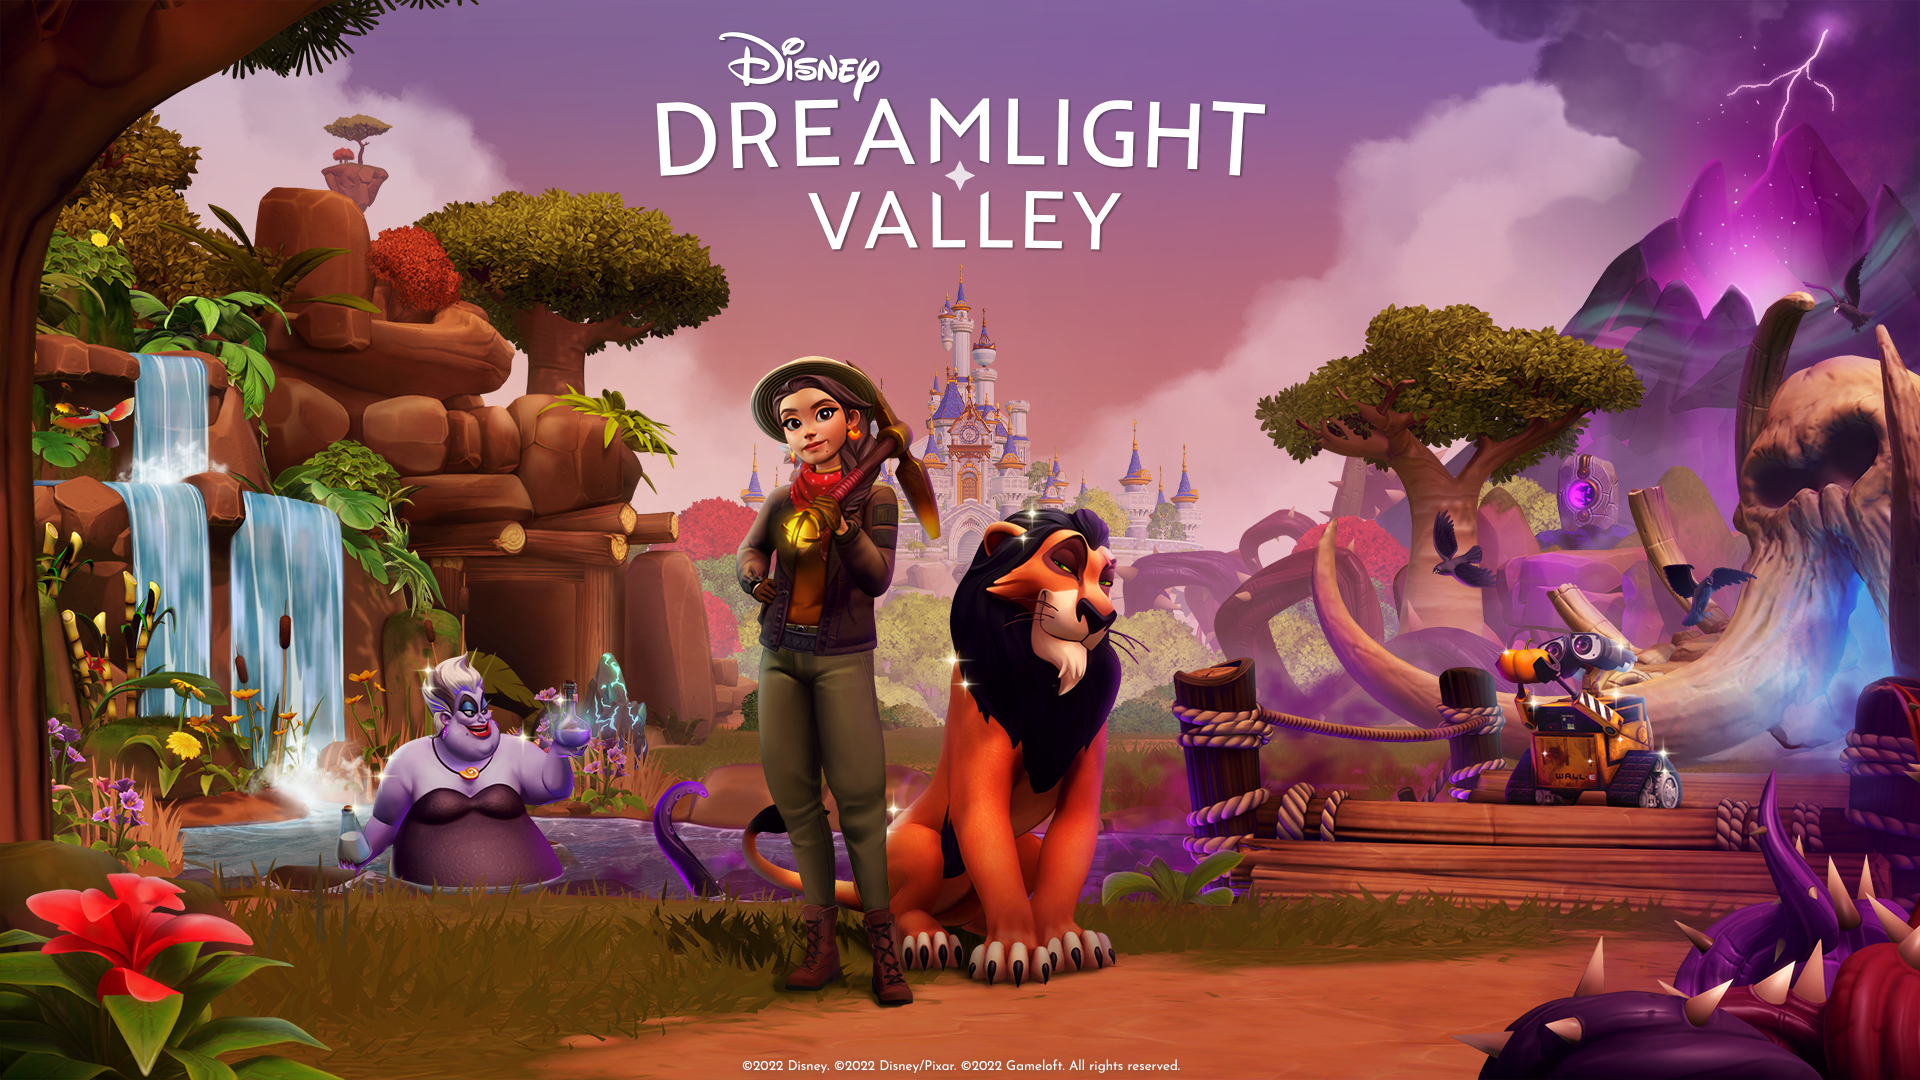 Disney Dreamlight Valley arribarà en format físic a Nintendo Switch, PlayStation i Xbox